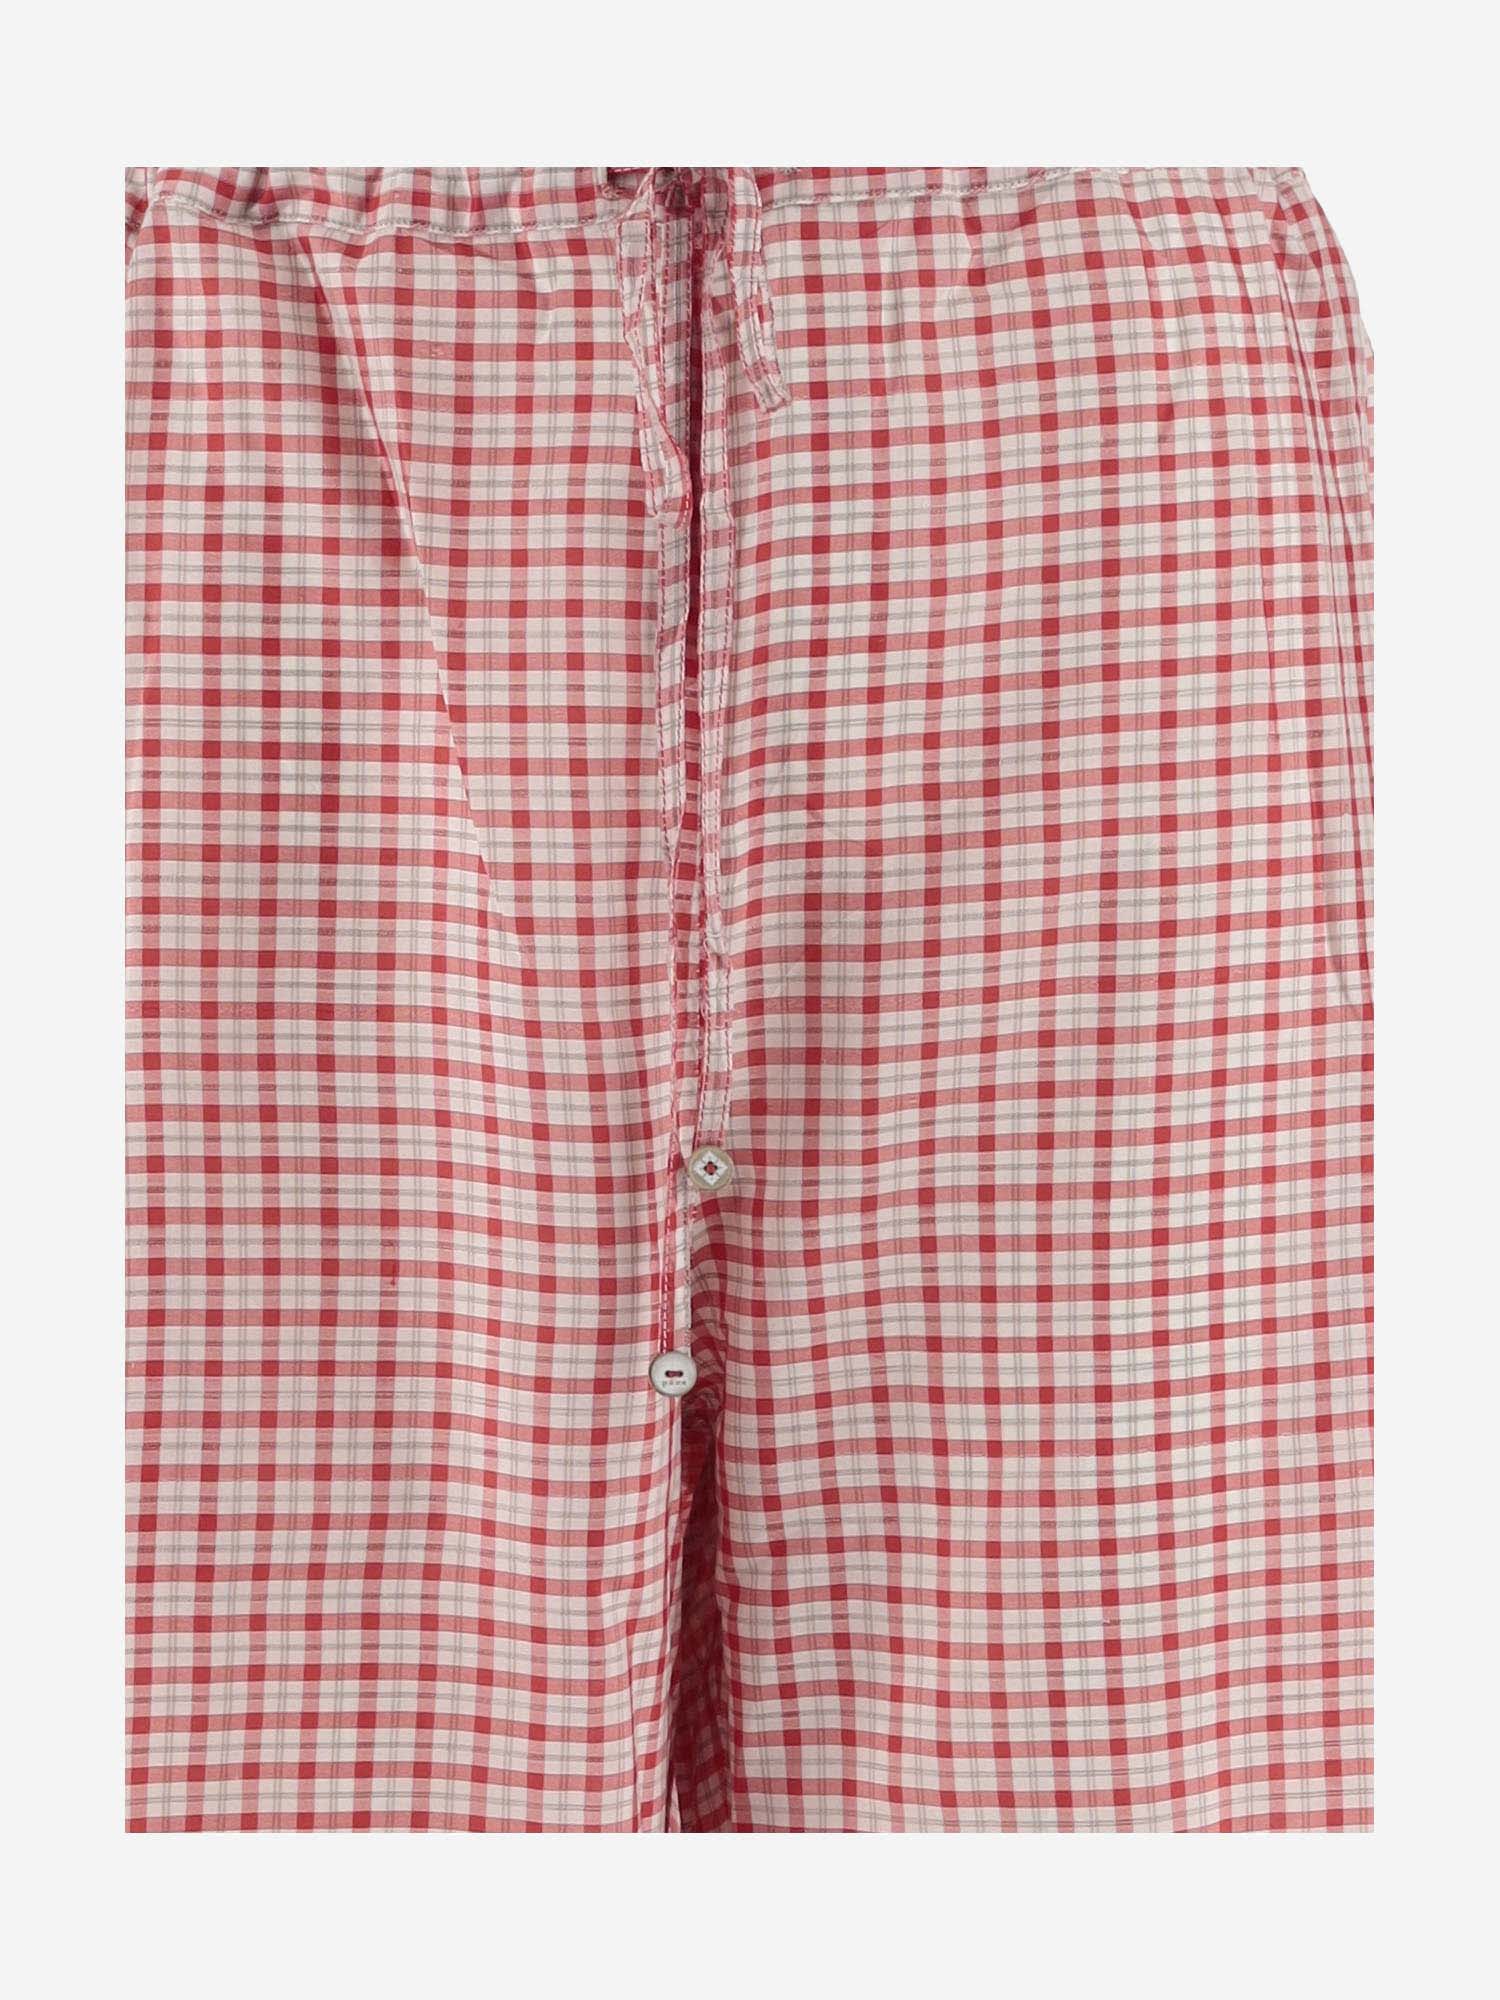 Shop Péro Pure Silk Pants With Check Pattern